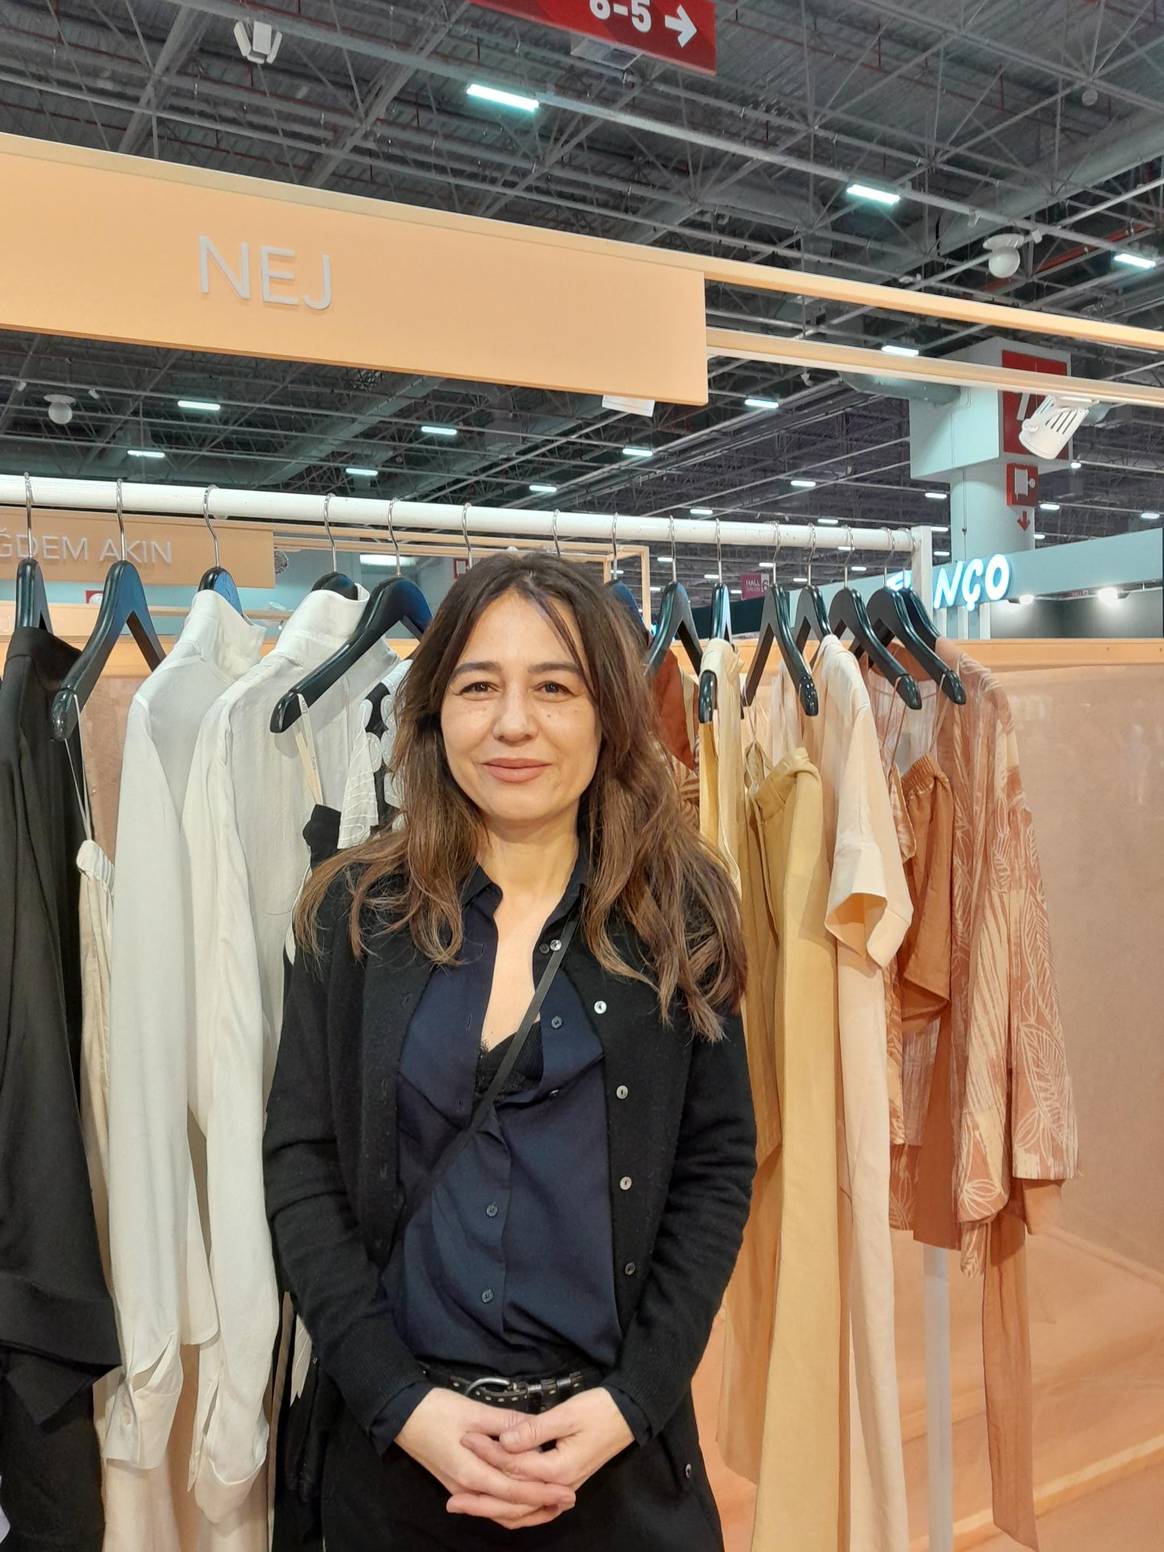 La stilista Nej Nejla Güvenç fondatrice del marchio Nej, presente a Ifco